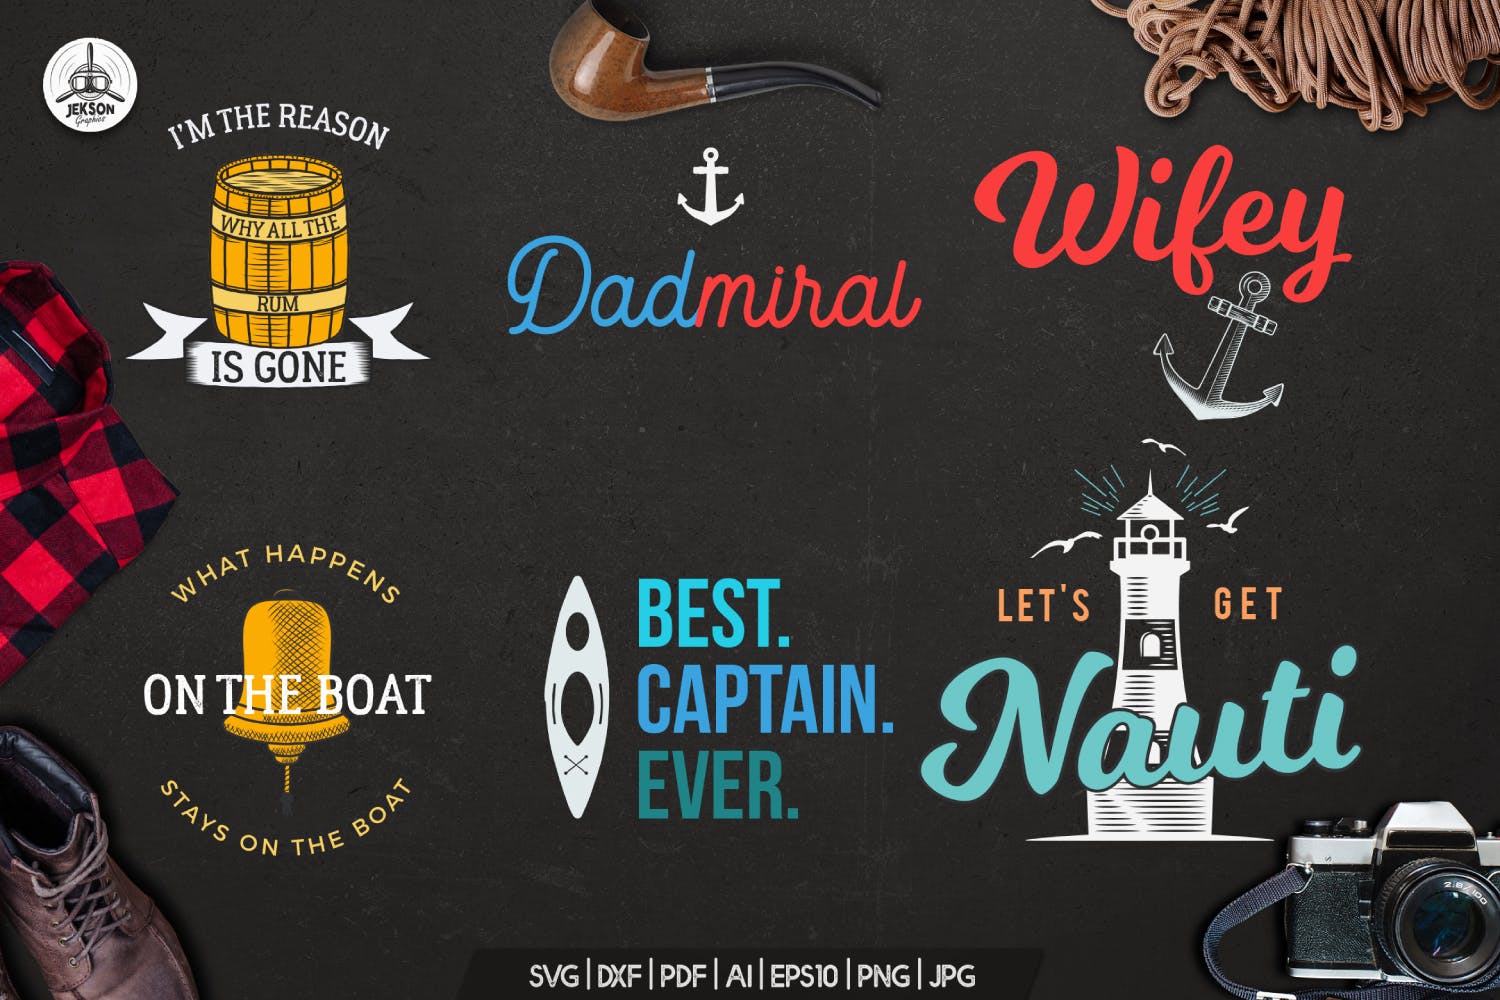 复古航海徽章/旅行标签/印刷品设计模板 Retro Nautical Badges Set, Travel Label, Prints插图(2)